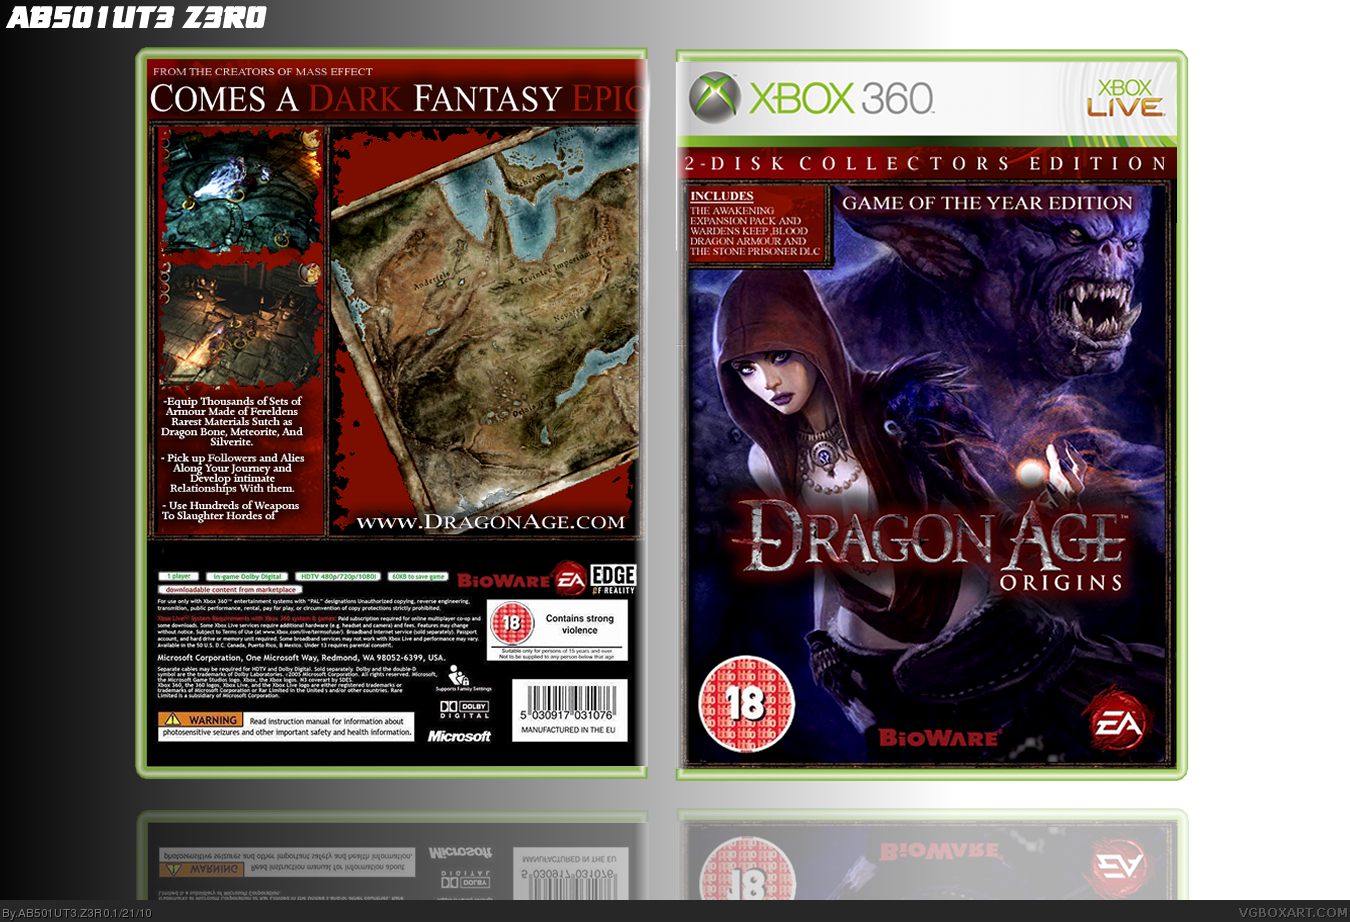 Dragon Age Origins: GOTY Edition box cover